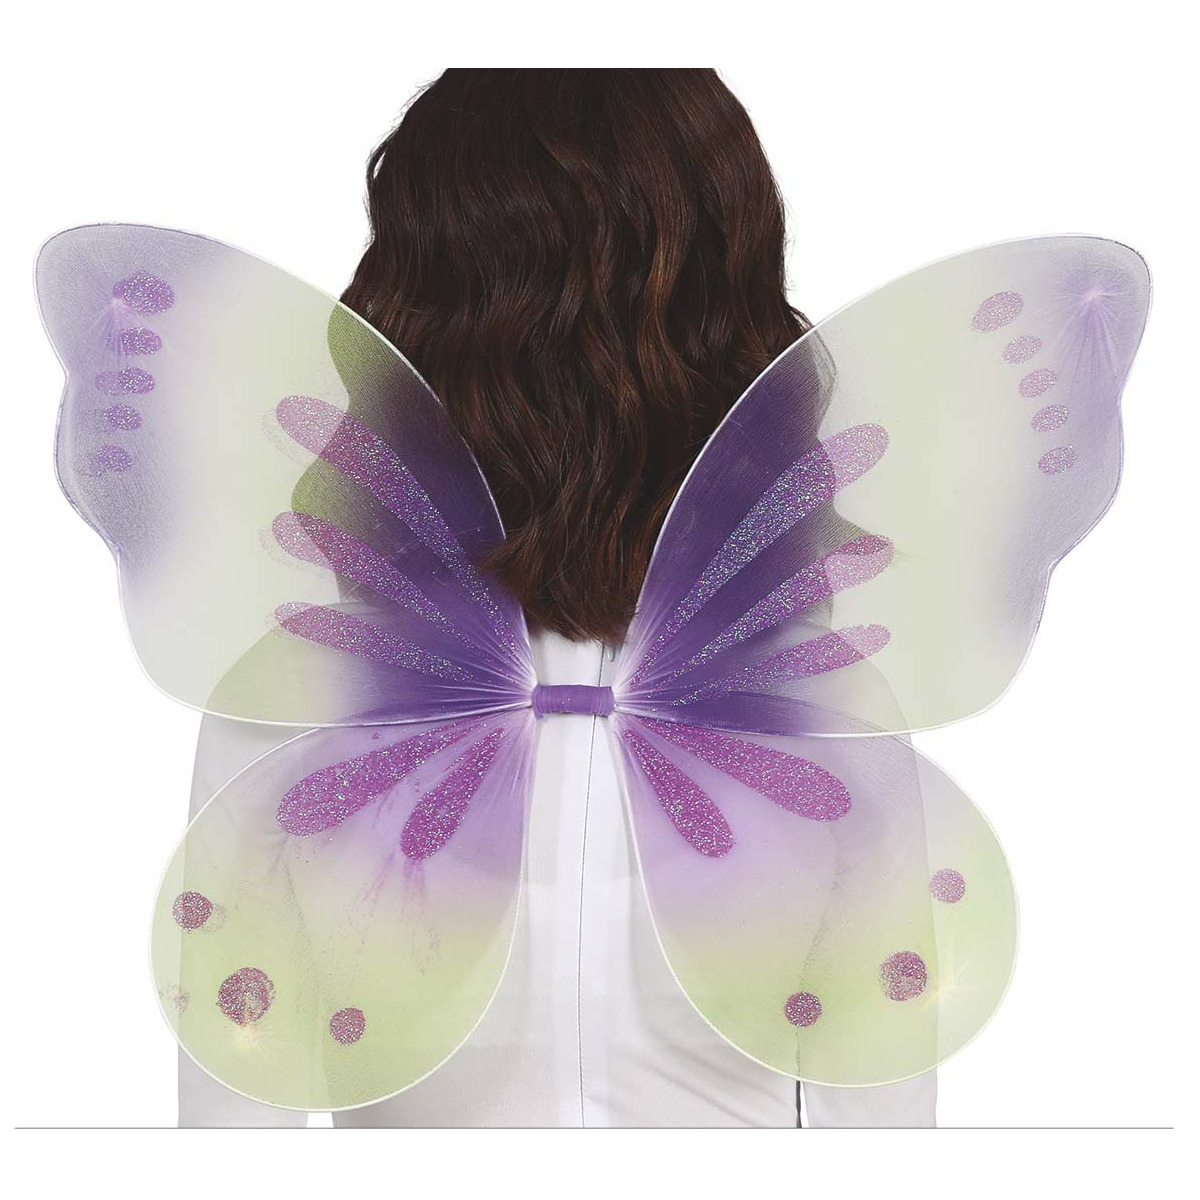 Verkleed vleugels vlinder groen-lila paars voor kinderen Carnavalskleding-accessoires